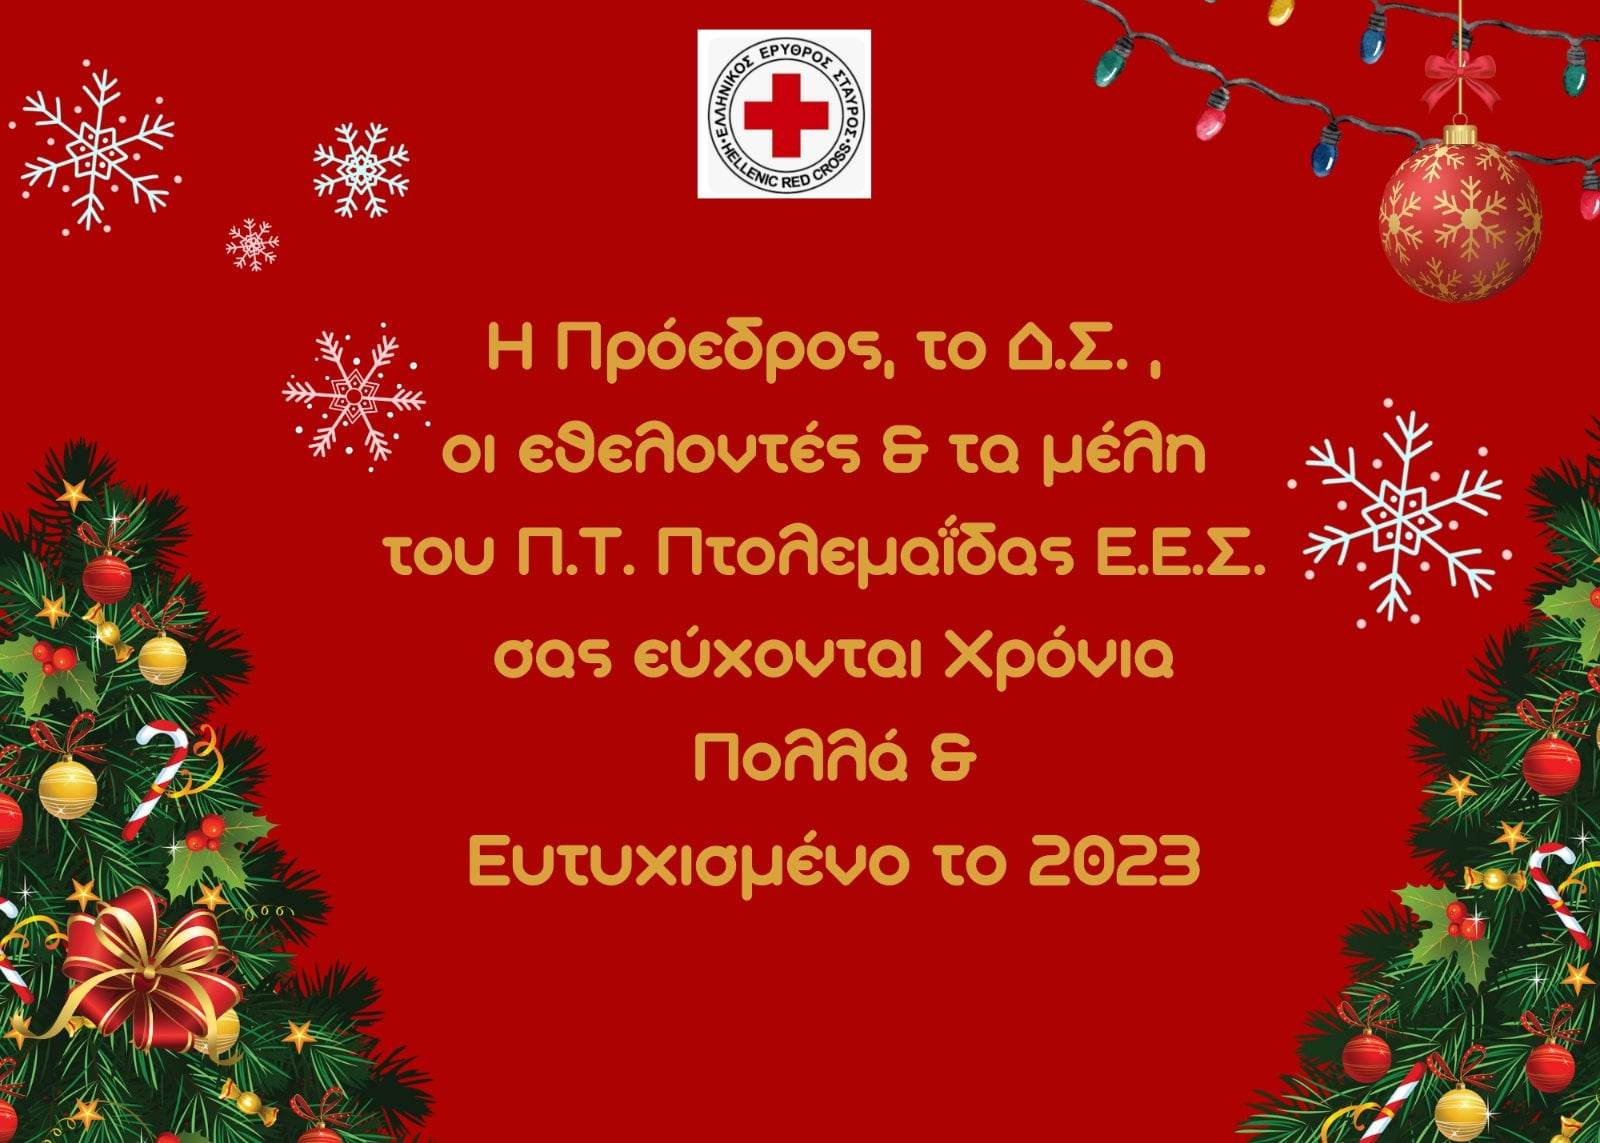 Eordaialive.com - Τα Νέα της Πτολεμαΐδας, Εορδαίας, Κοζάνης Χριστουγεννιάτικες Ευχές από το Περιφερειακό Τμήμα Ελληνικού Ερυθρού Σταυρού Πτολεμαΐδας